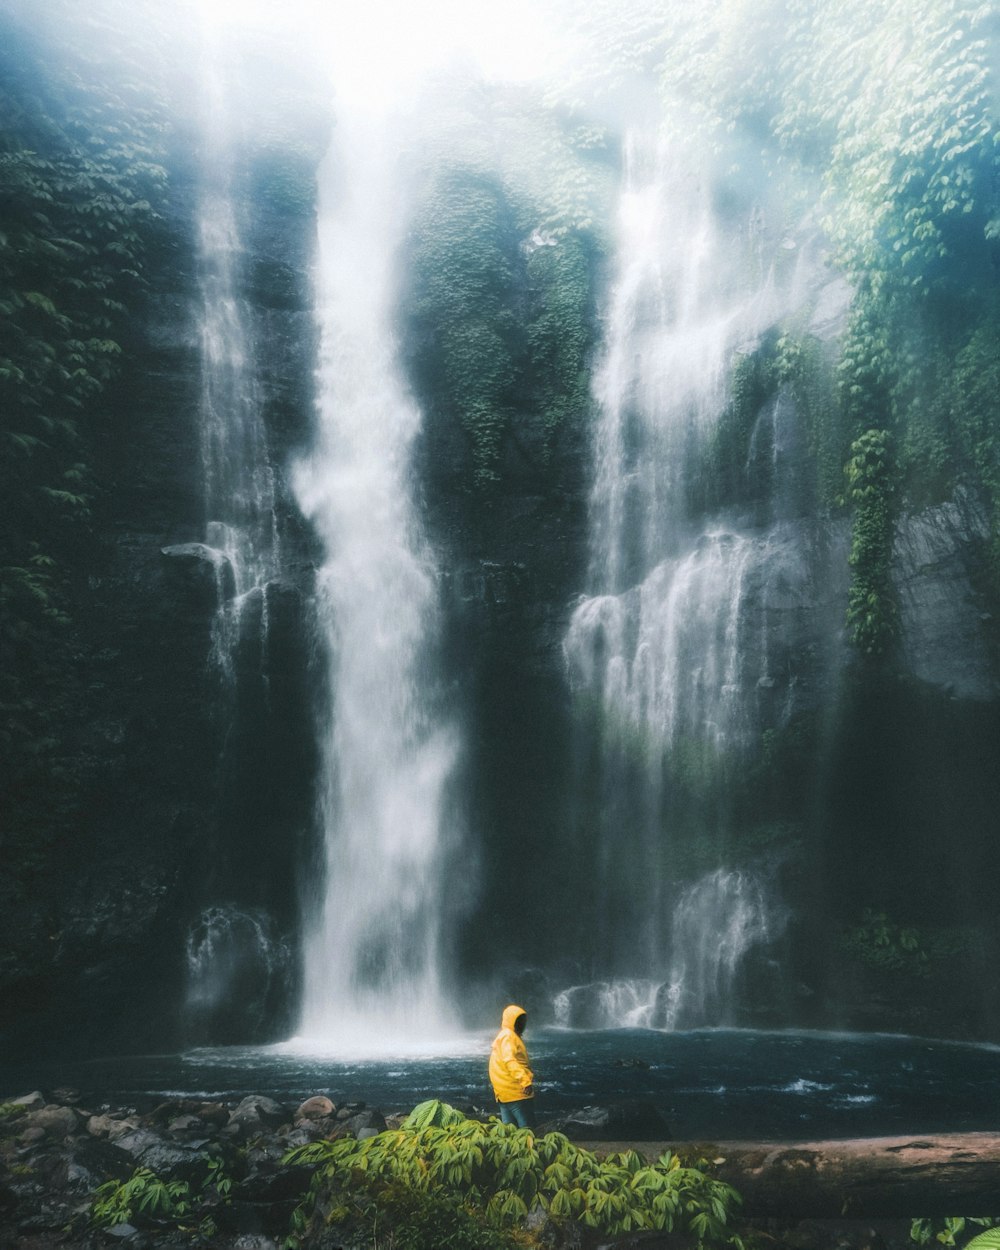 person wearing yellow hooded jacket standing near waterfalls